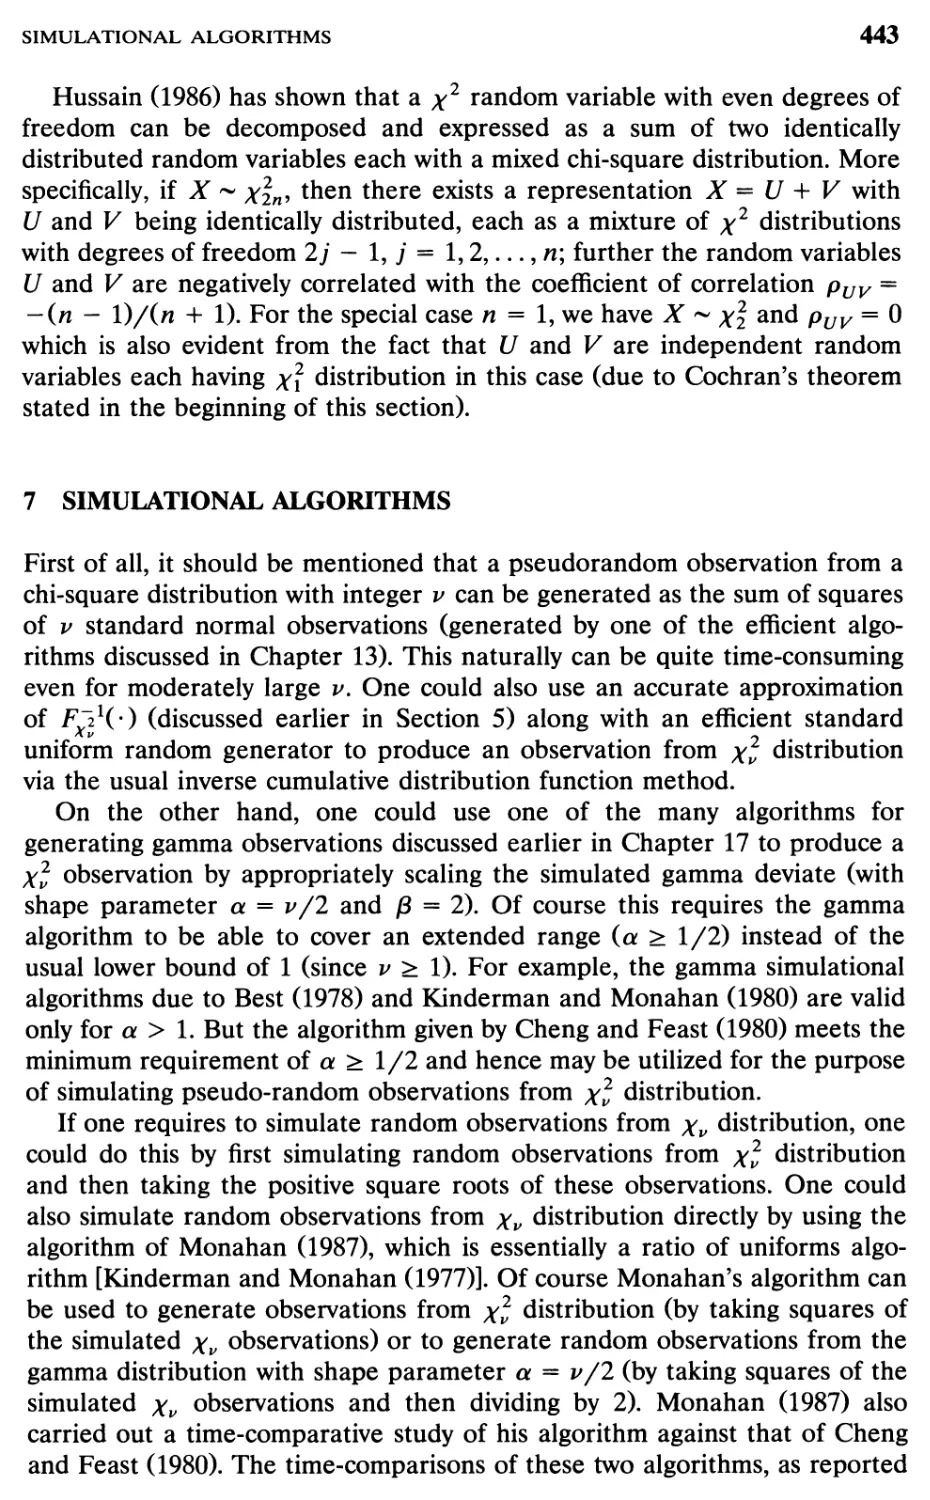 7 Simulational Algorithms, 443